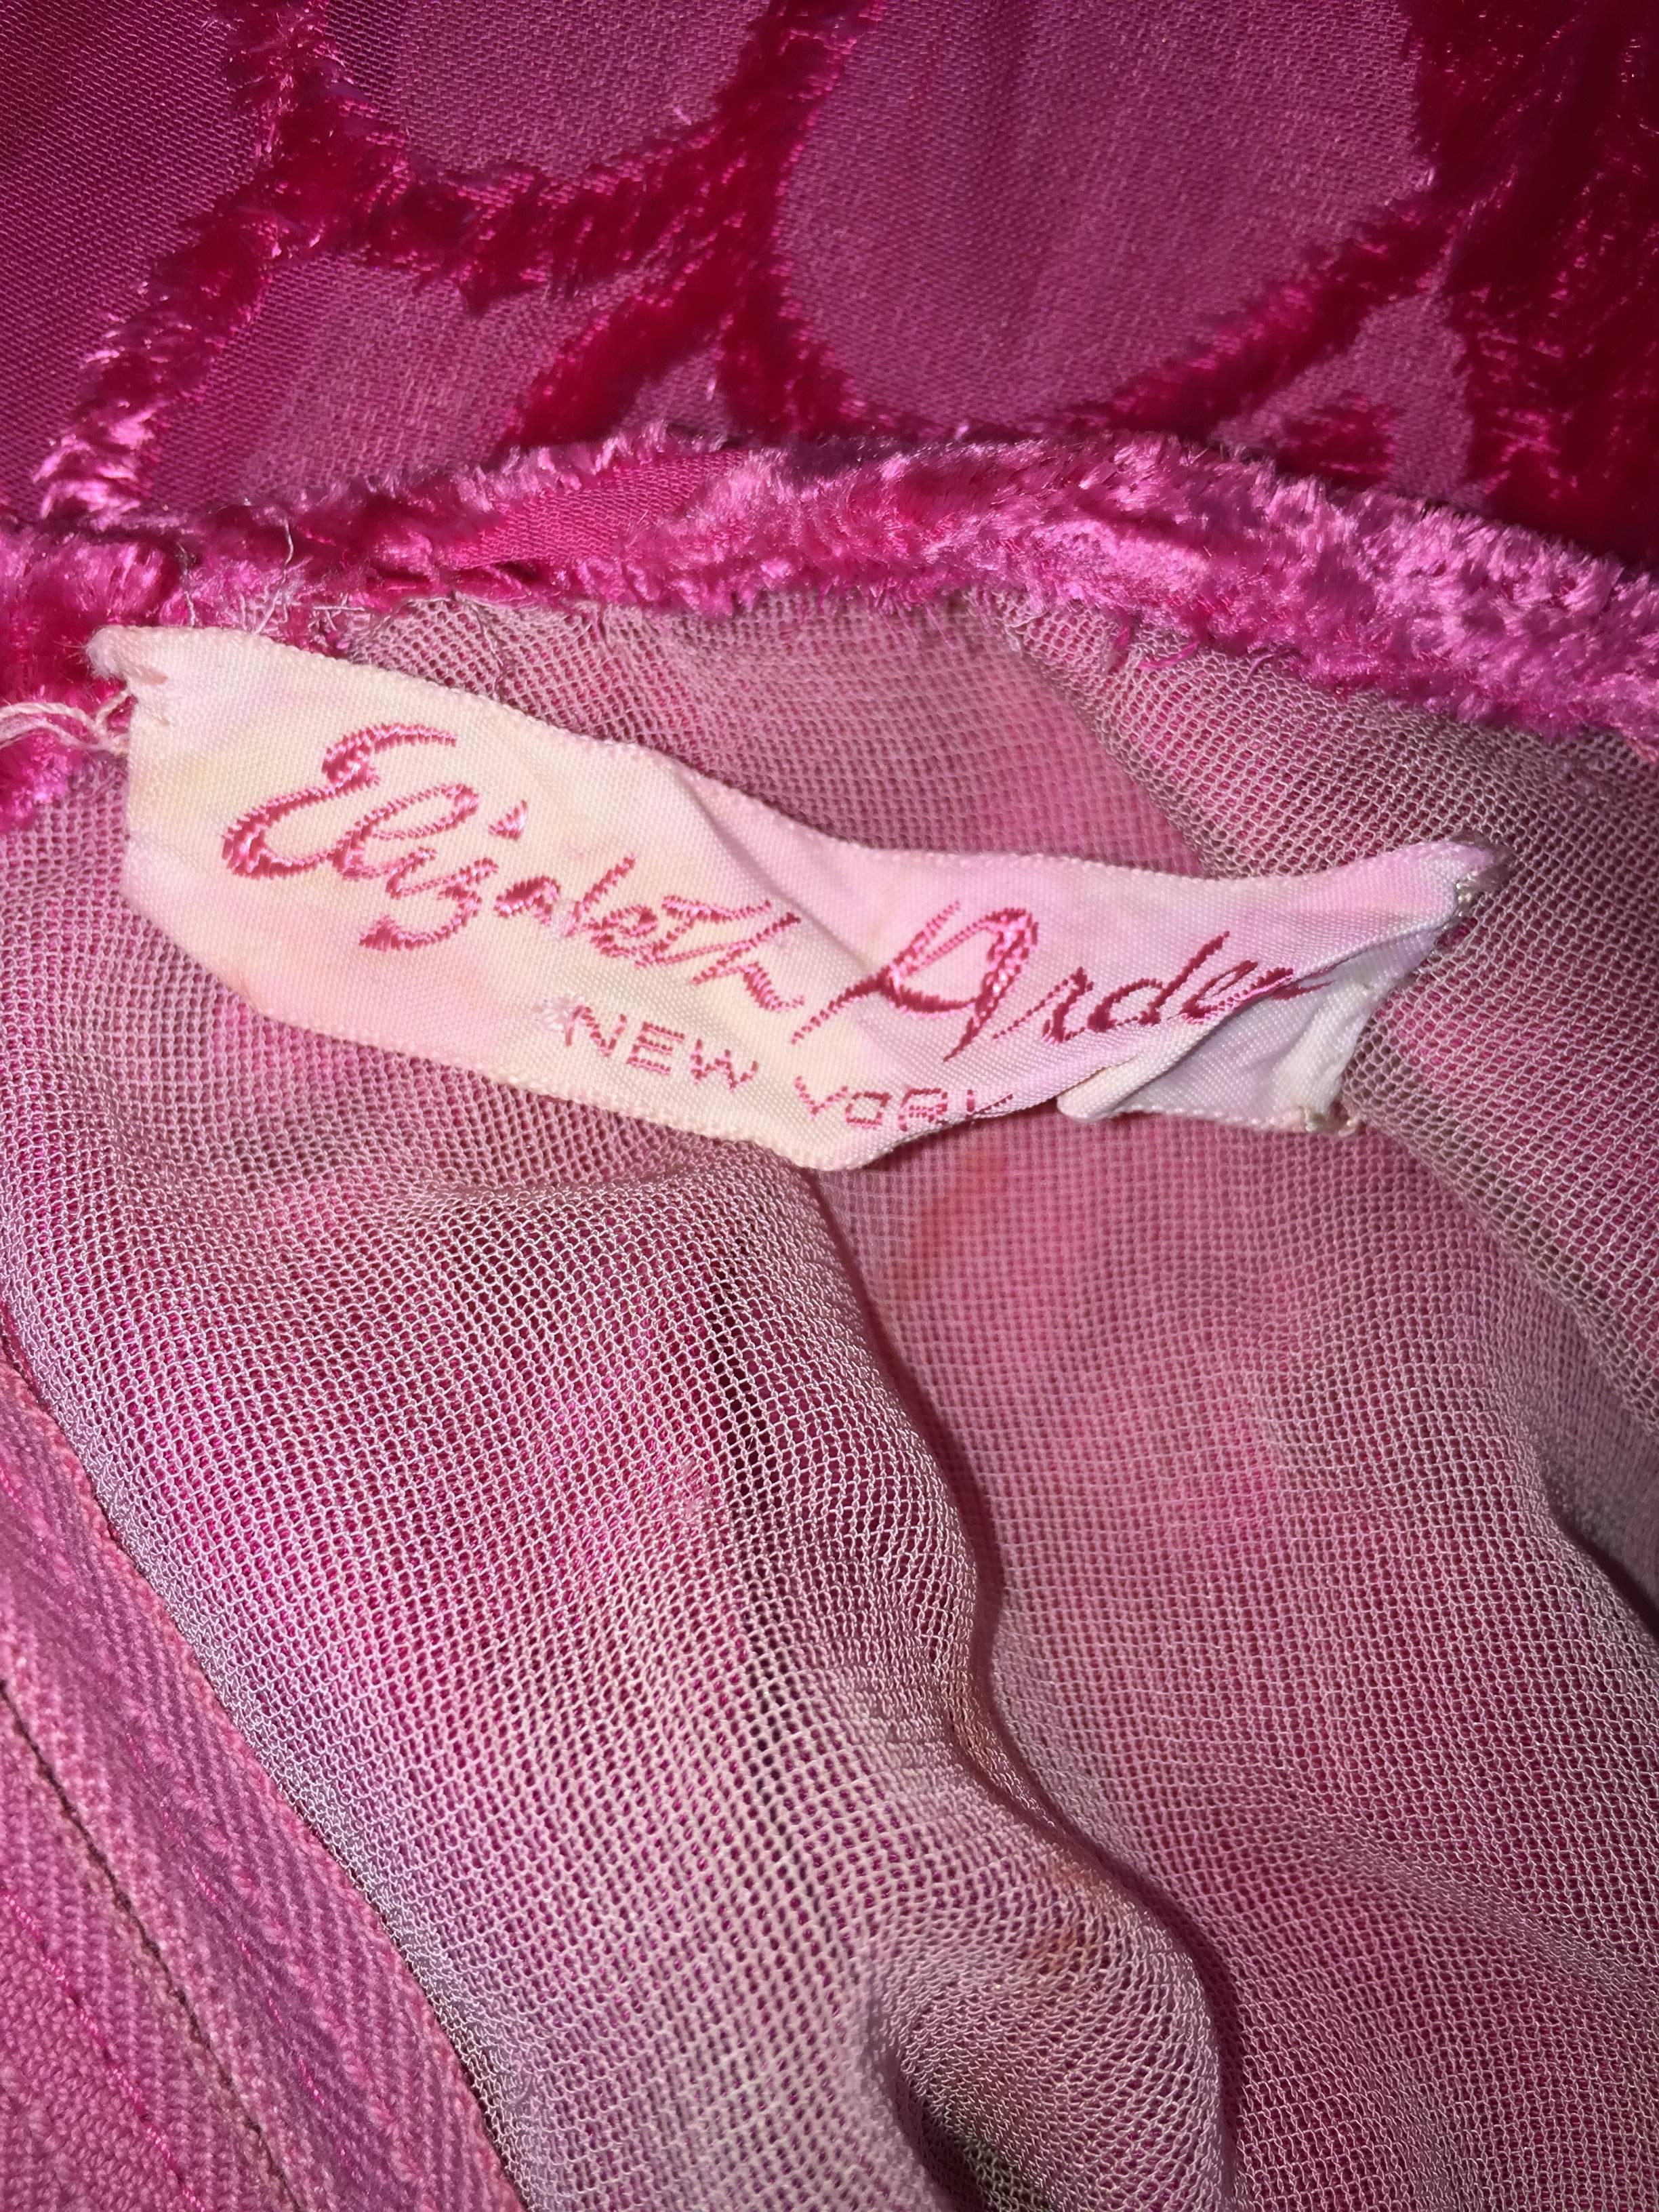 Vintage Elizabeth Arden 1970s Hot Pink Fuchsia Crushed Silk Velvet Maxi ...